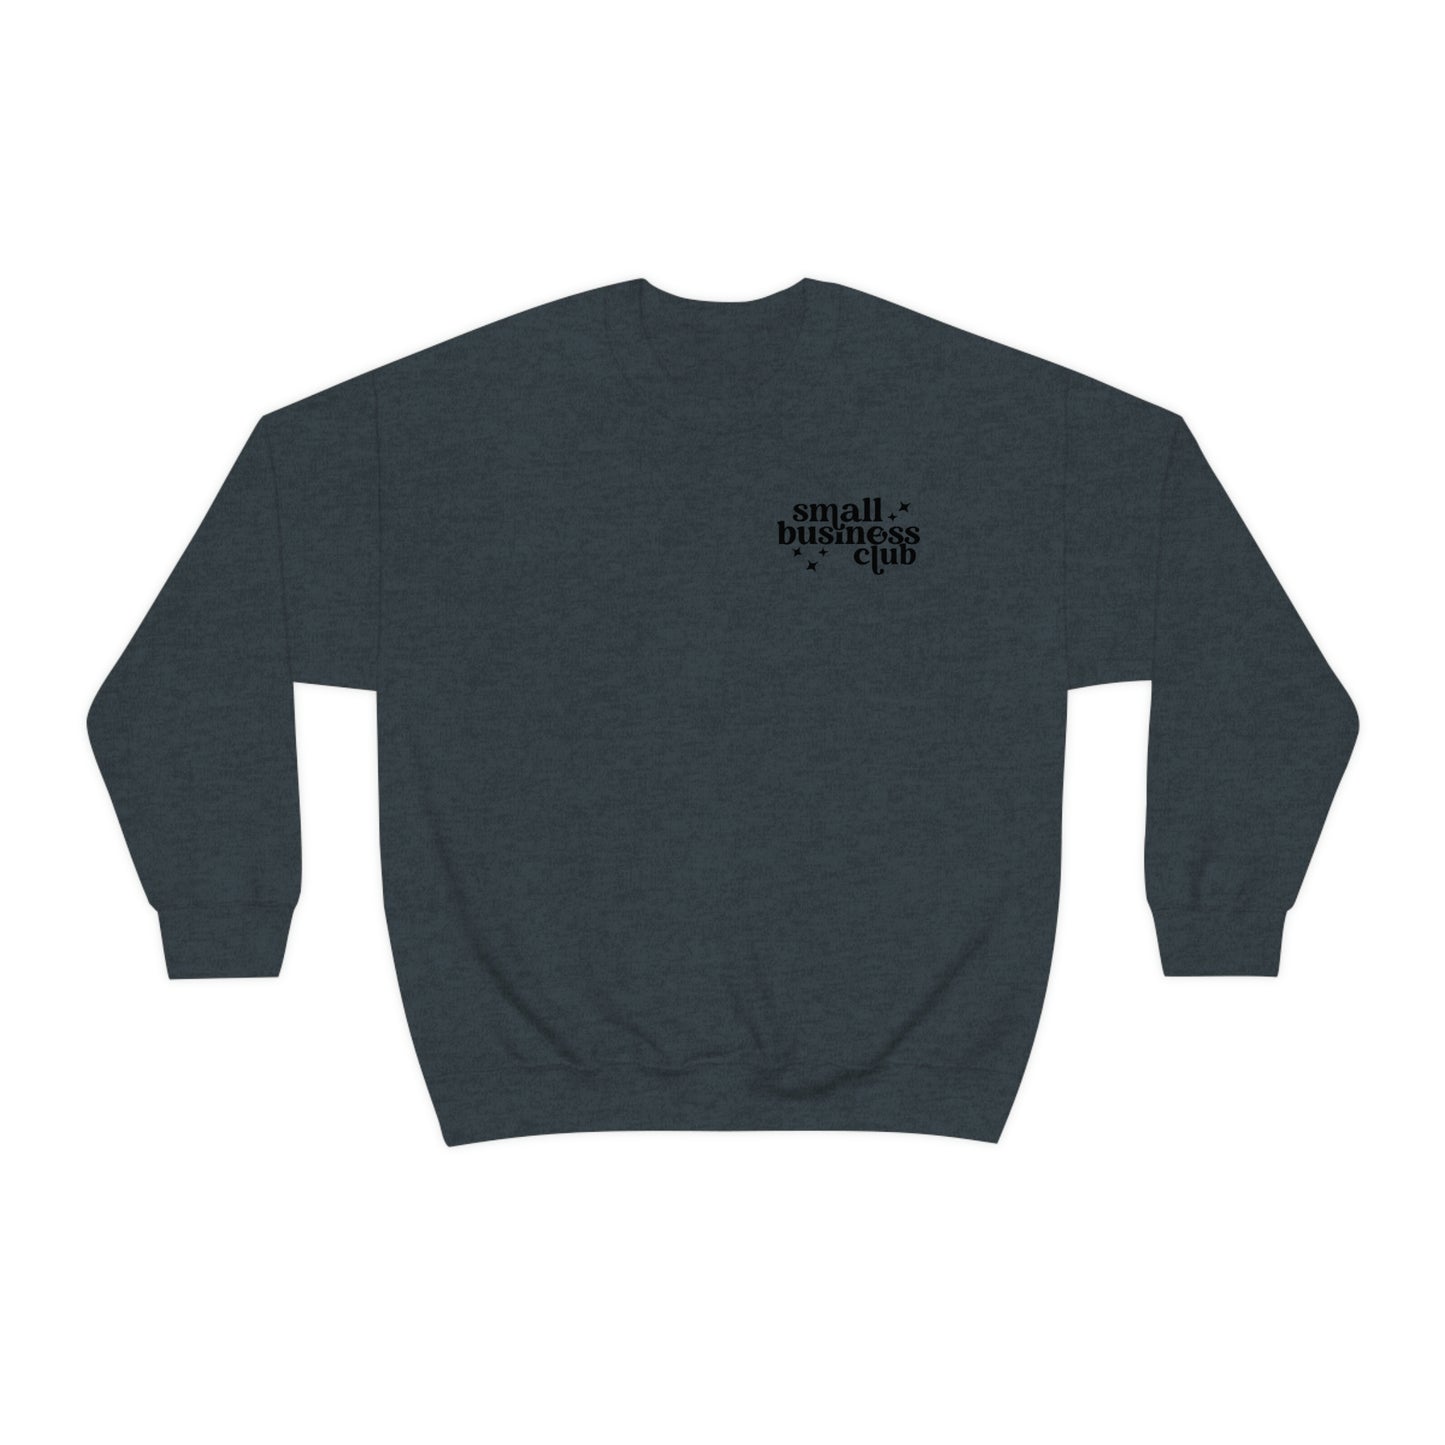 Small Business Club Crewneck Sweatshirt